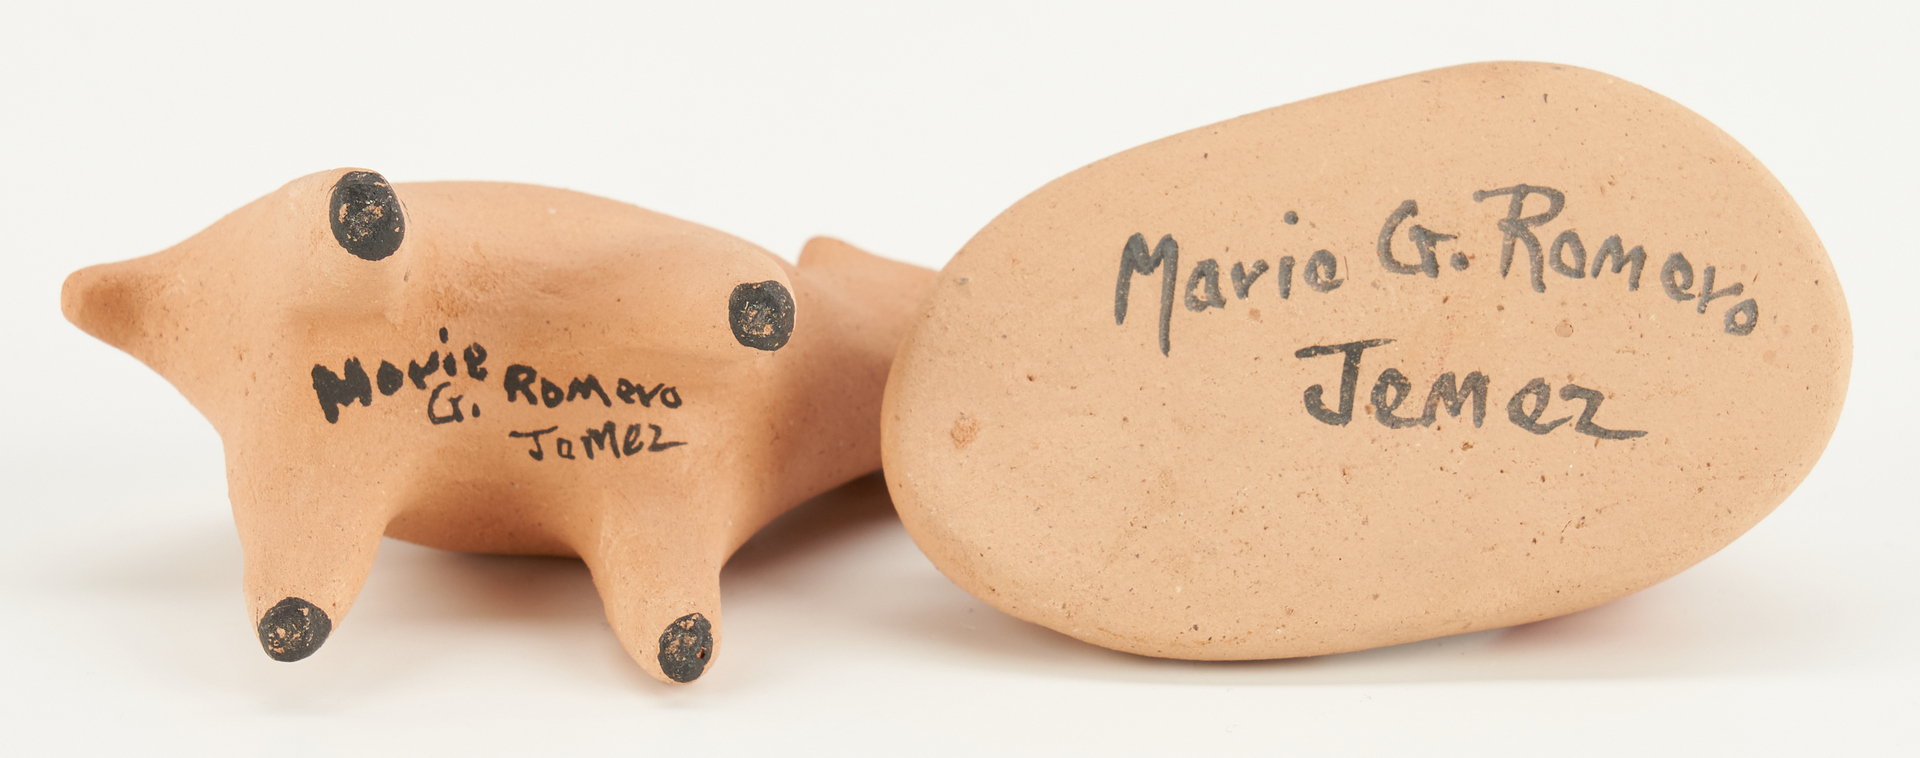 Lot 423: Native American Pueblo Pottery Nativity Set by Marie G. Romero